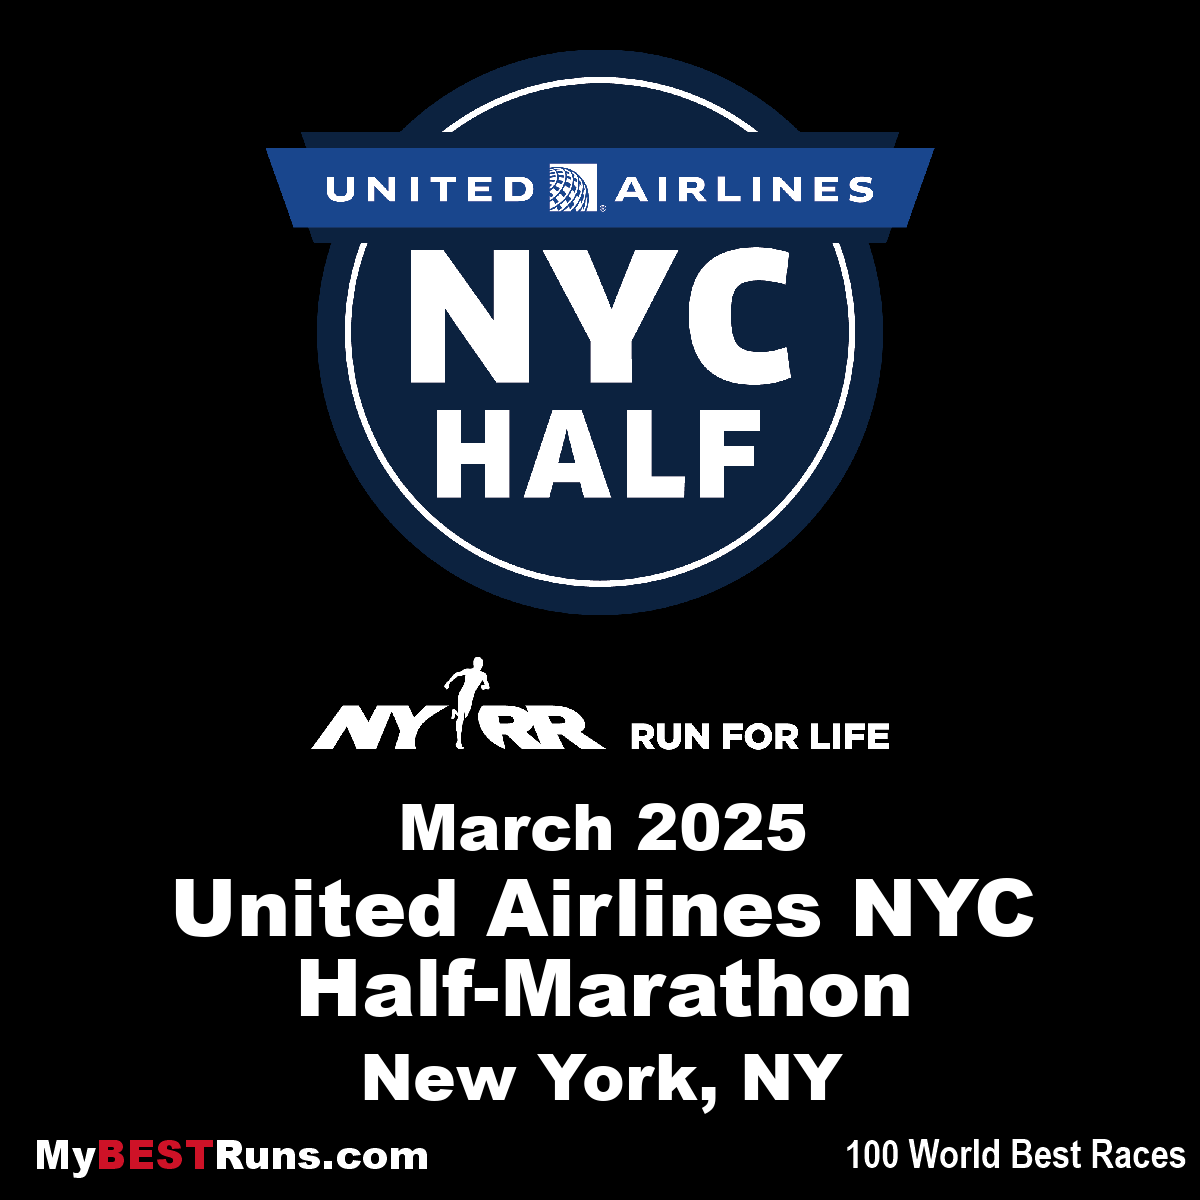 United Airlines NYC Half-Marathon 